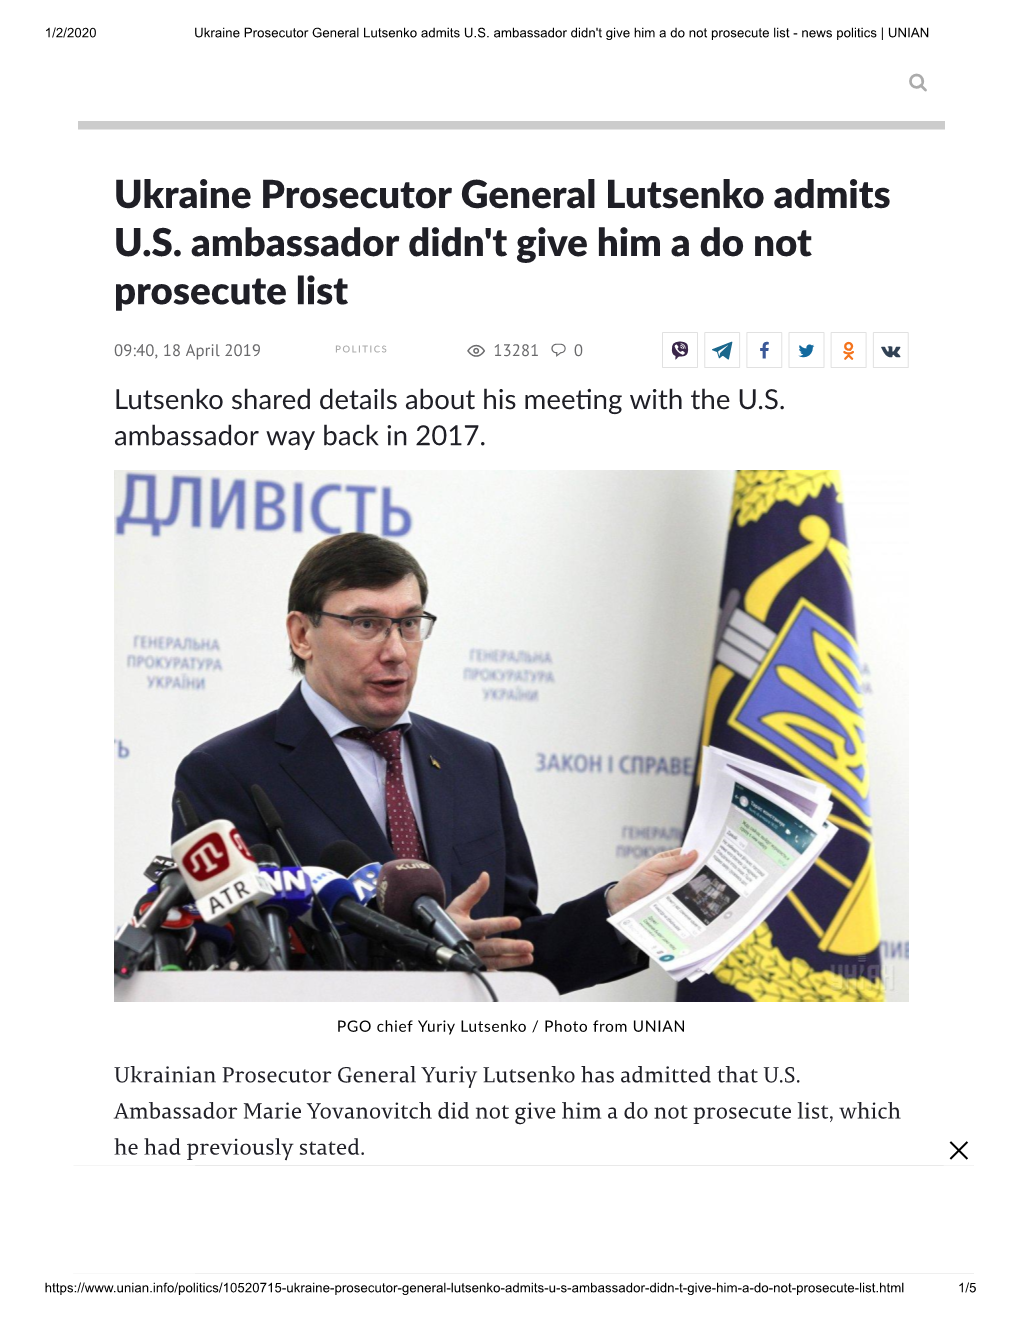 Ukraine Prosecutor General Lutsenko Admits U.S. Ambassador Didn't Give Him a Do Not Prosecute List - News Politics | UNIAN